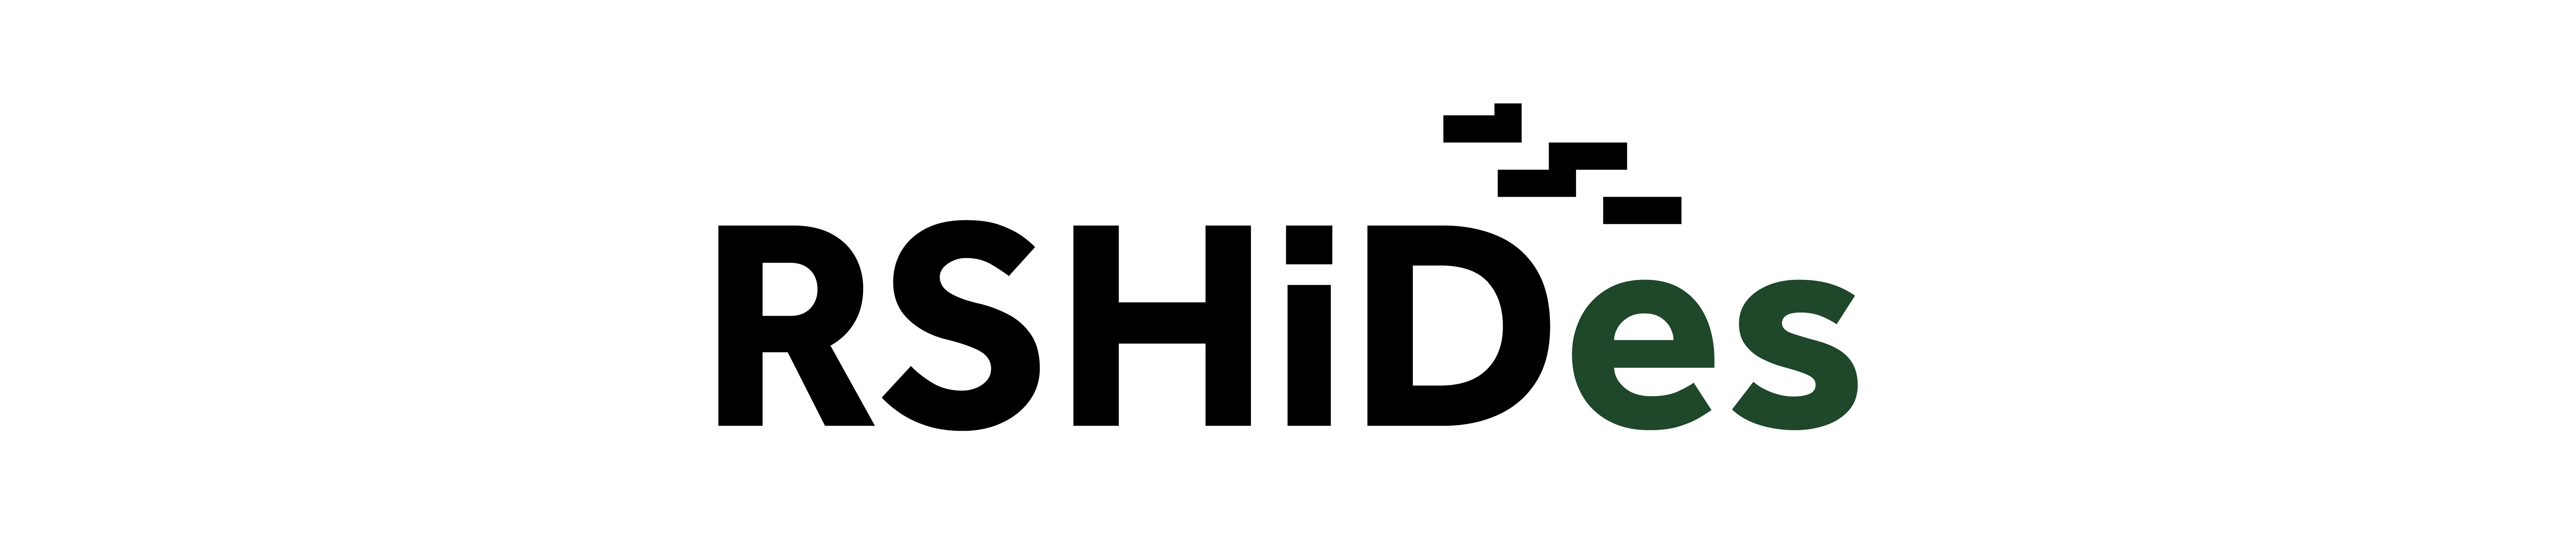 Rshid es's profile banner